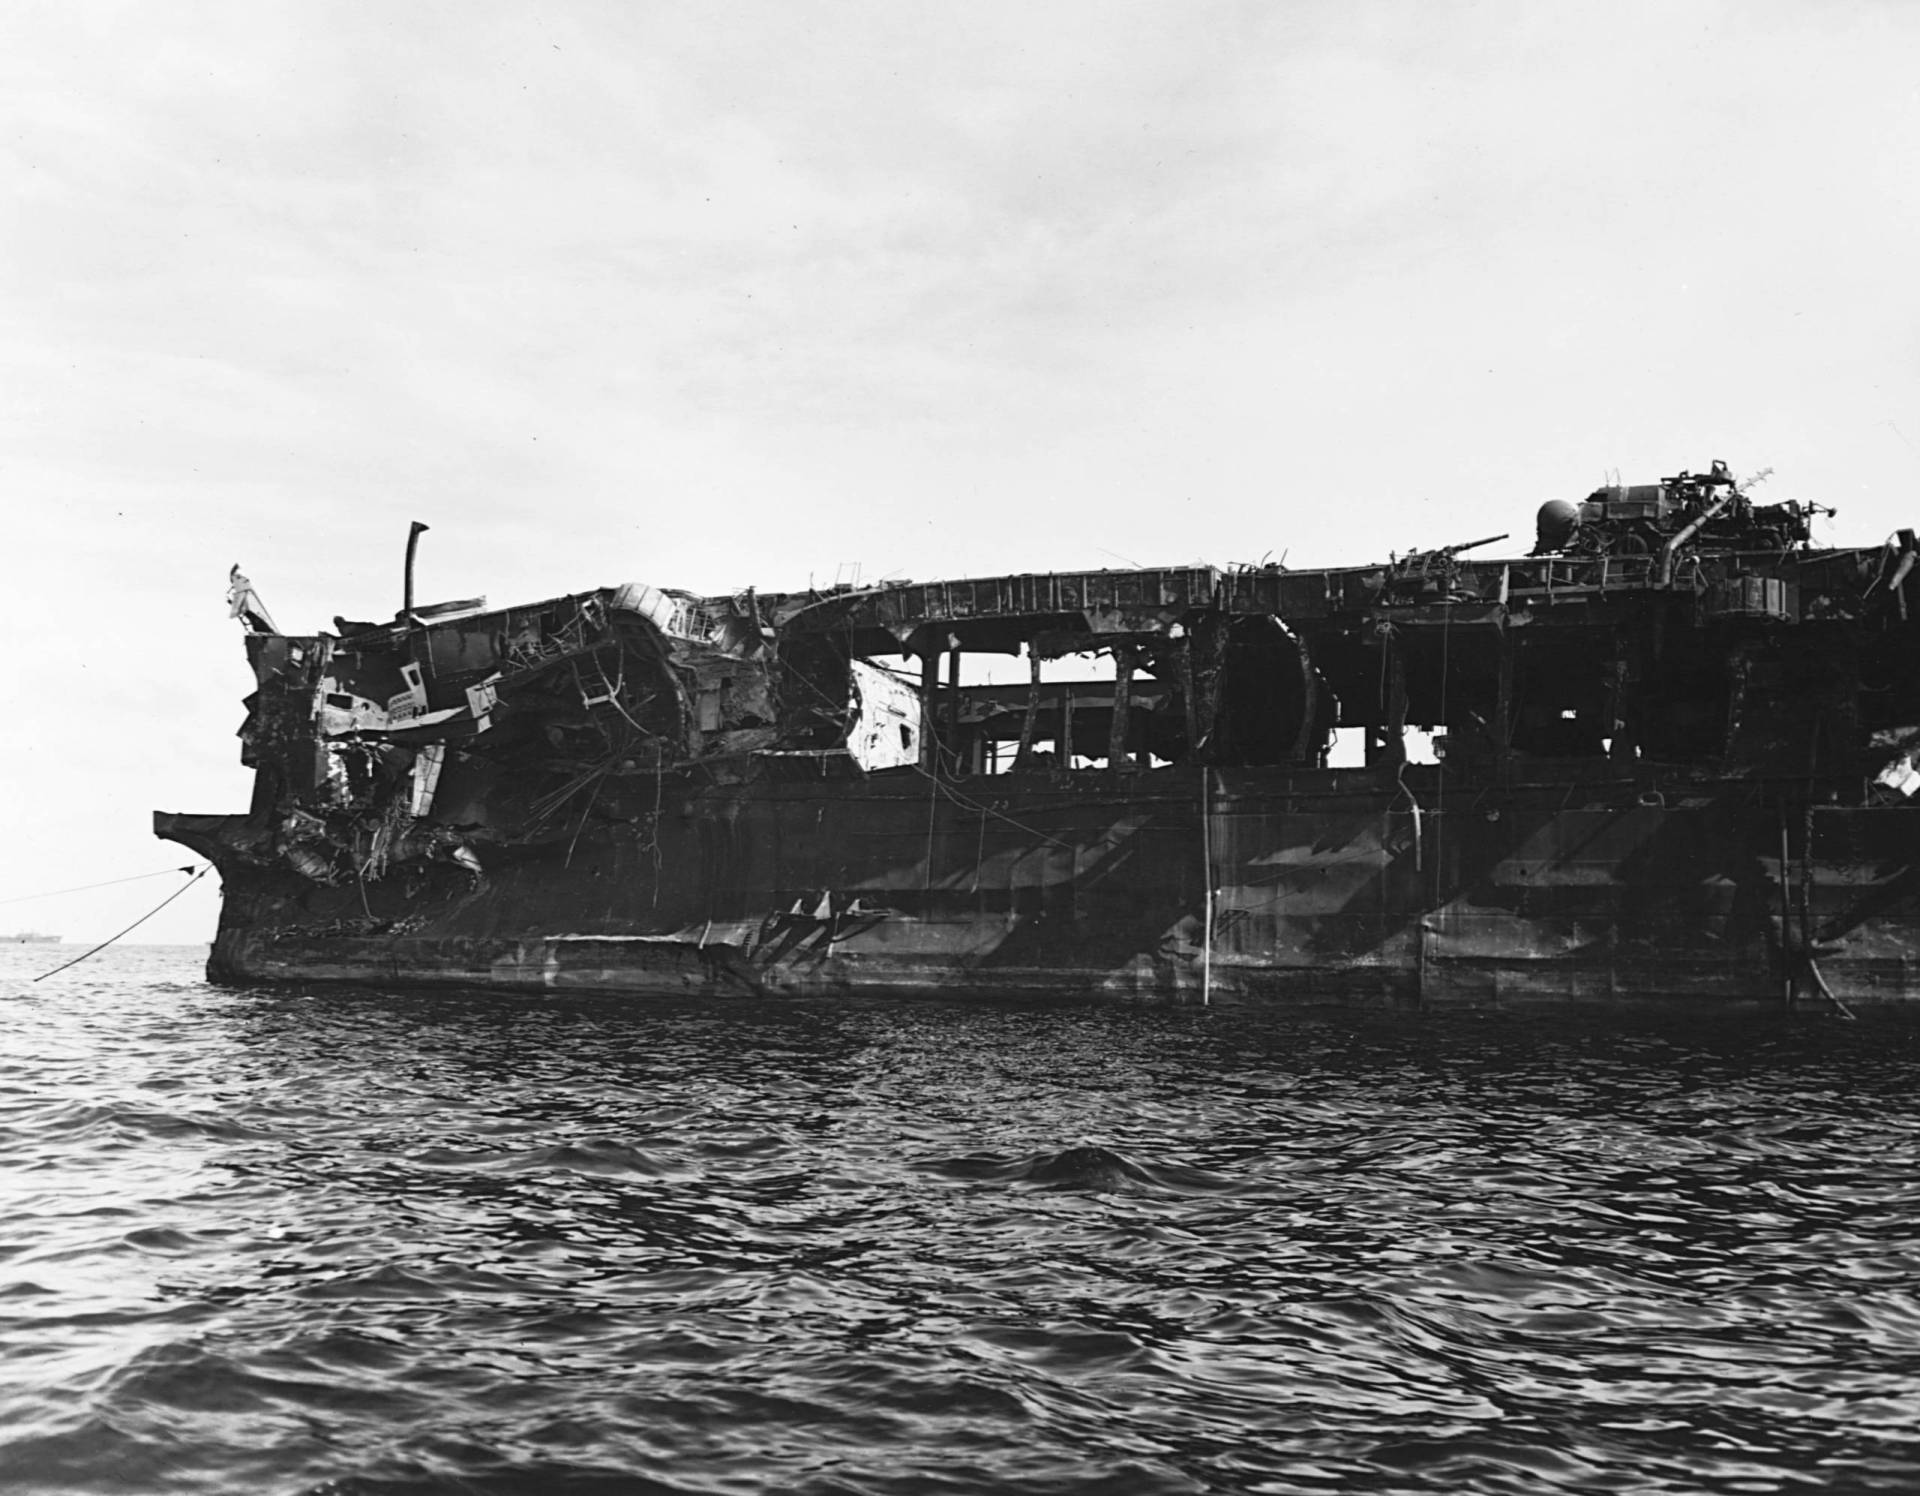 A war ship in unrecognizable, blackened ruins.